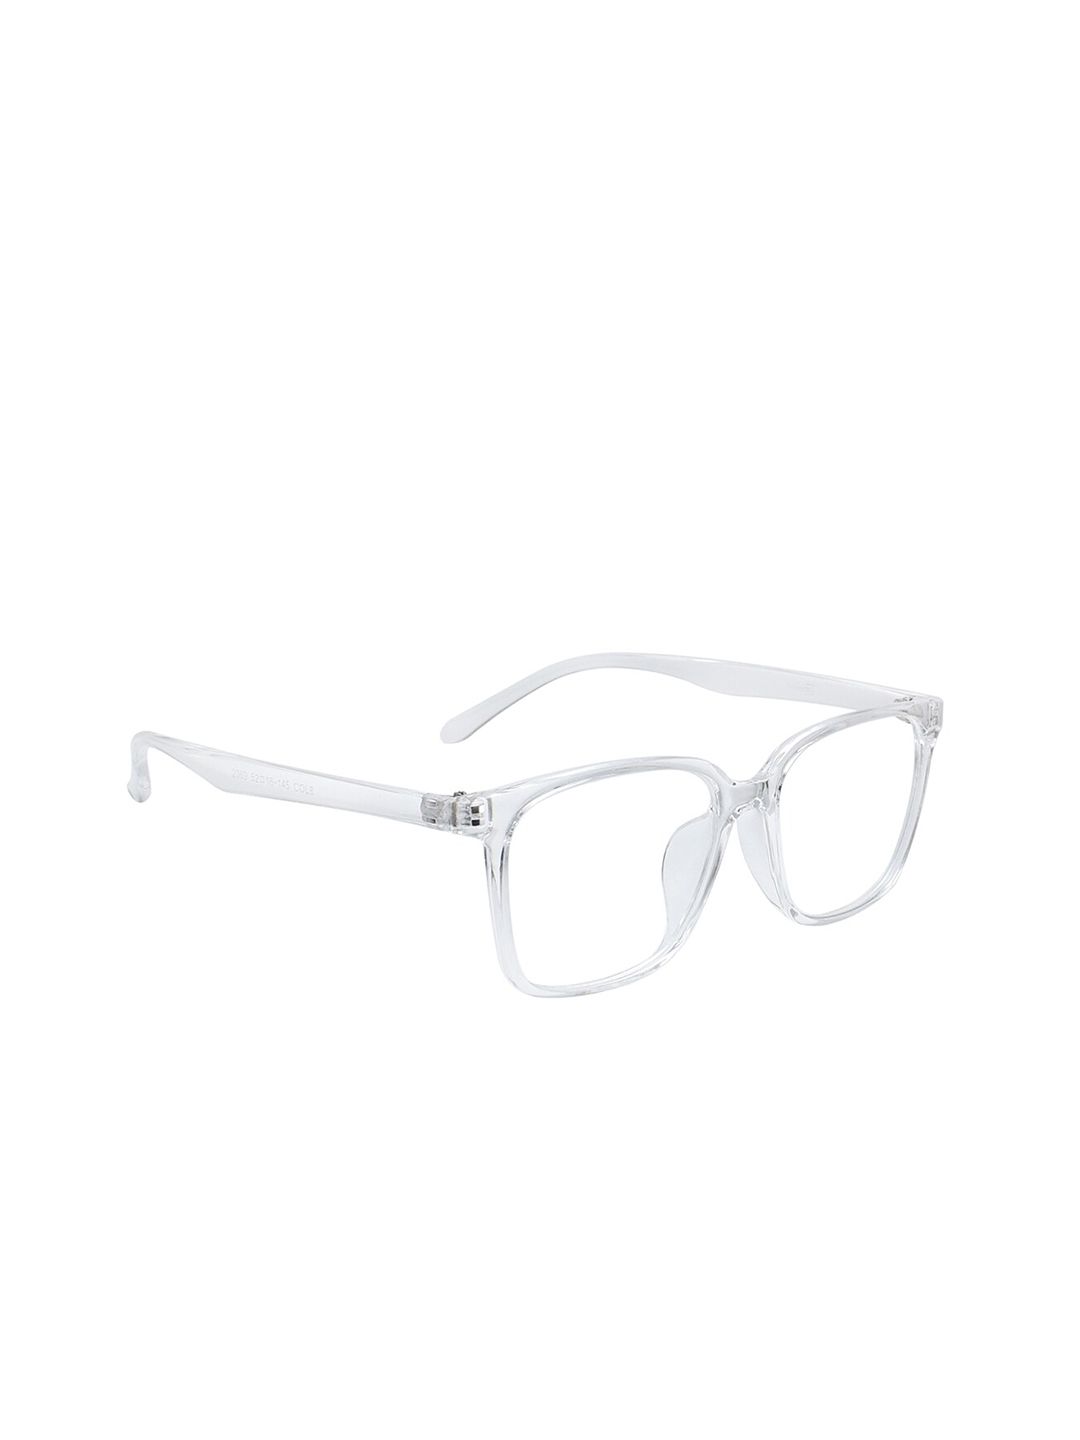 Peter Jones Eyewear Unisex Transparent Anti Glare Computer Glasses Square Frames 2369W Price in India